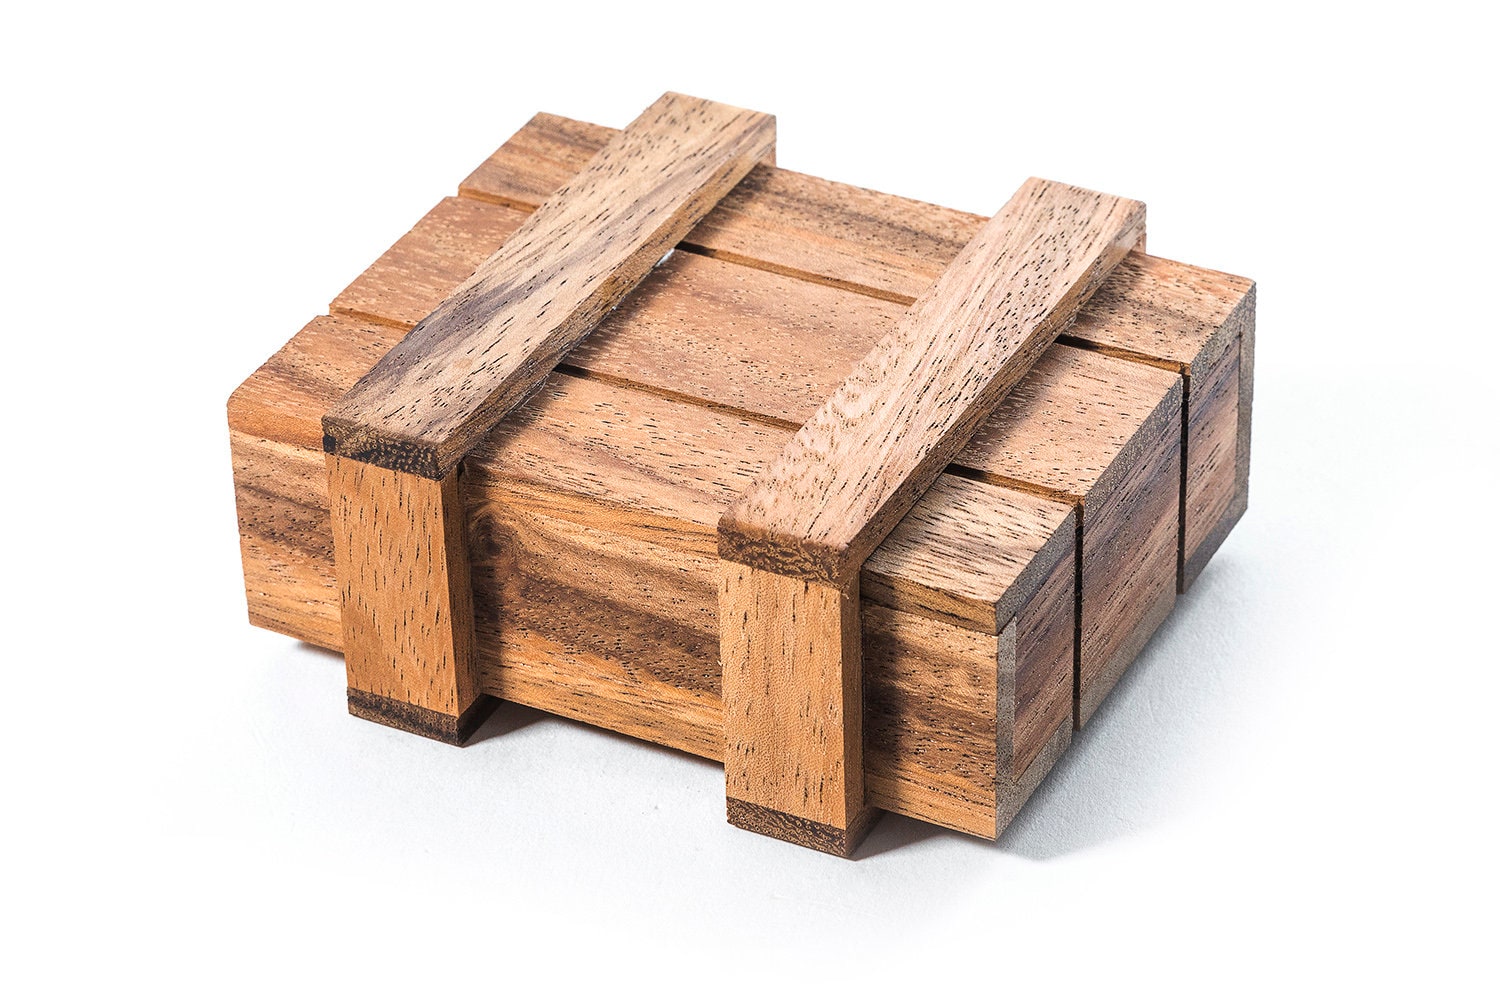 Puzzle Kit - DIY One Step Puzzle Box – Kubiya Games